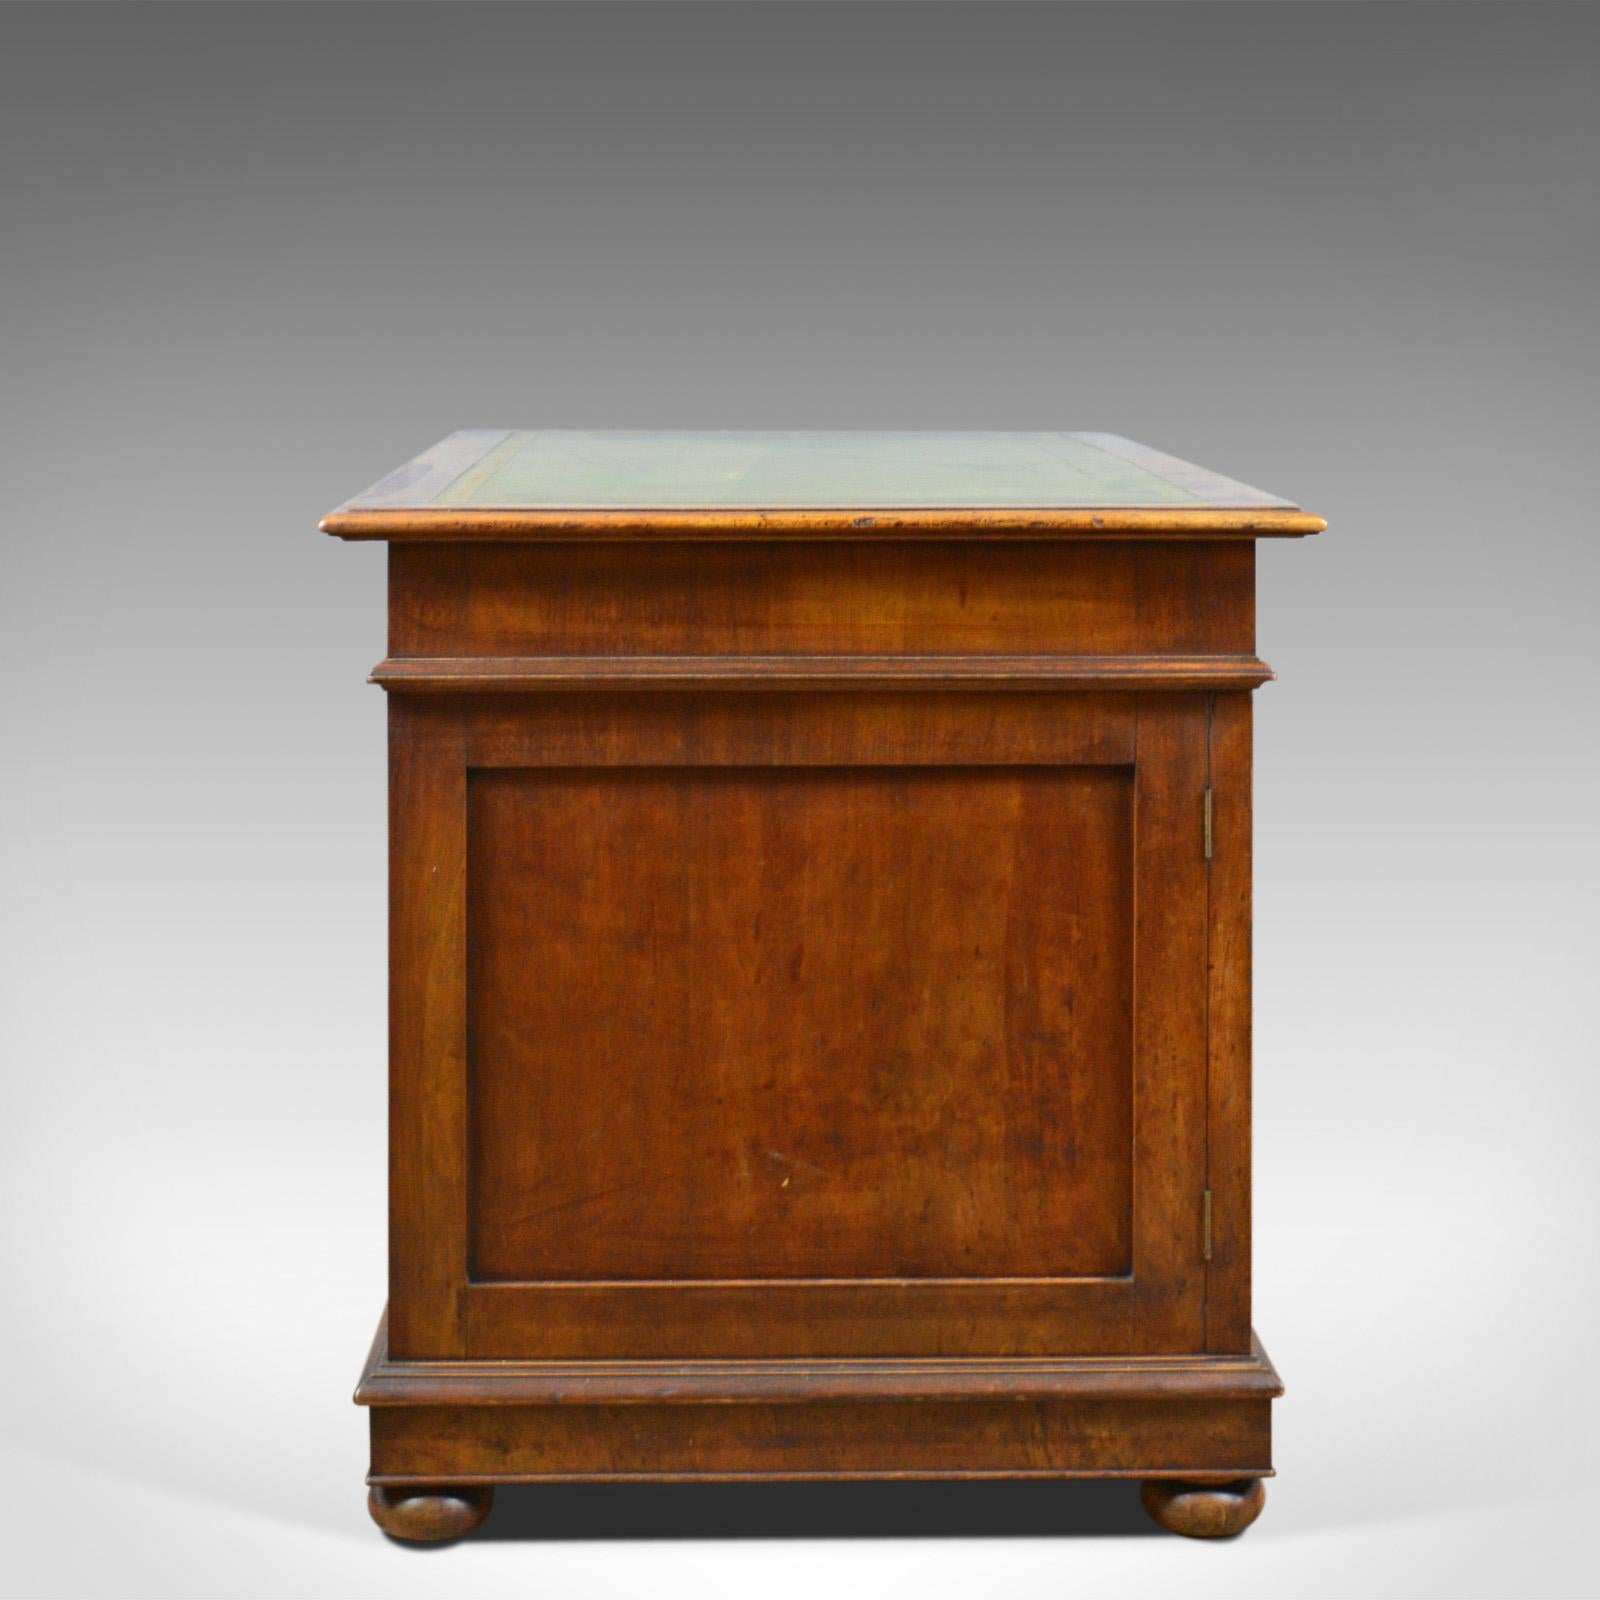 Victorian Antique Pedestal Desk, French, 19th Century, Walnut, Leather Top, circa 1880